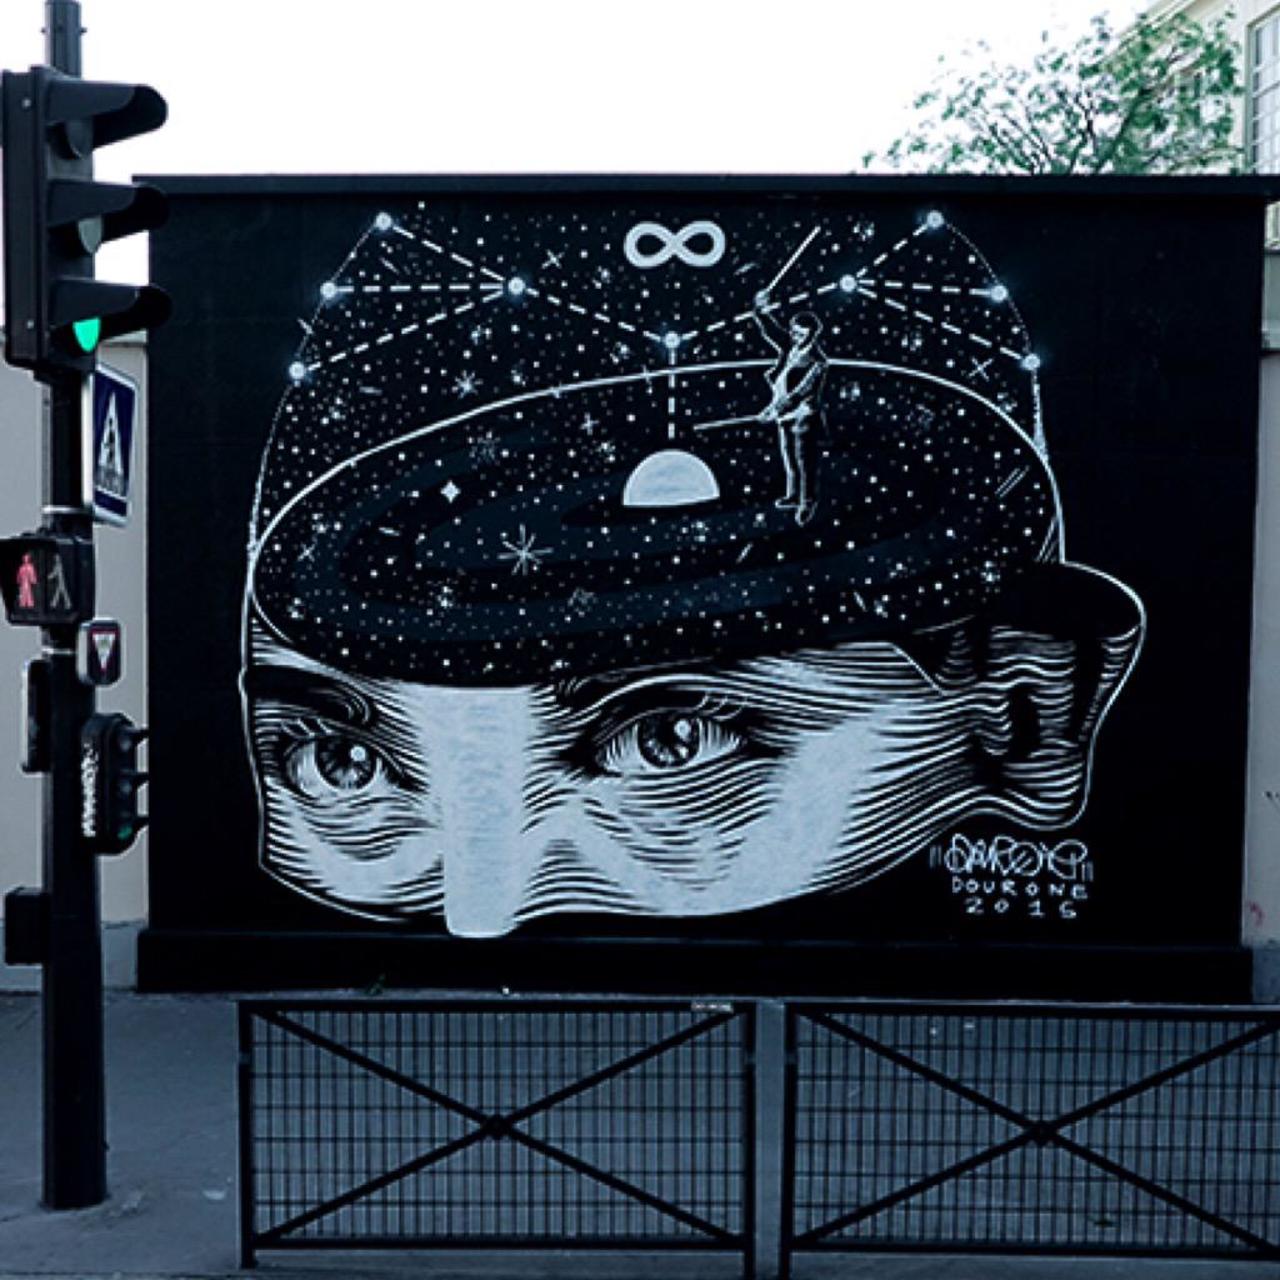 "Seducción Demente" #mural del #artista #Dourone en Rue des Récollets en Paris, #Francia #streetart #graffiti #arte http://t.co/1rZMTzNPsA